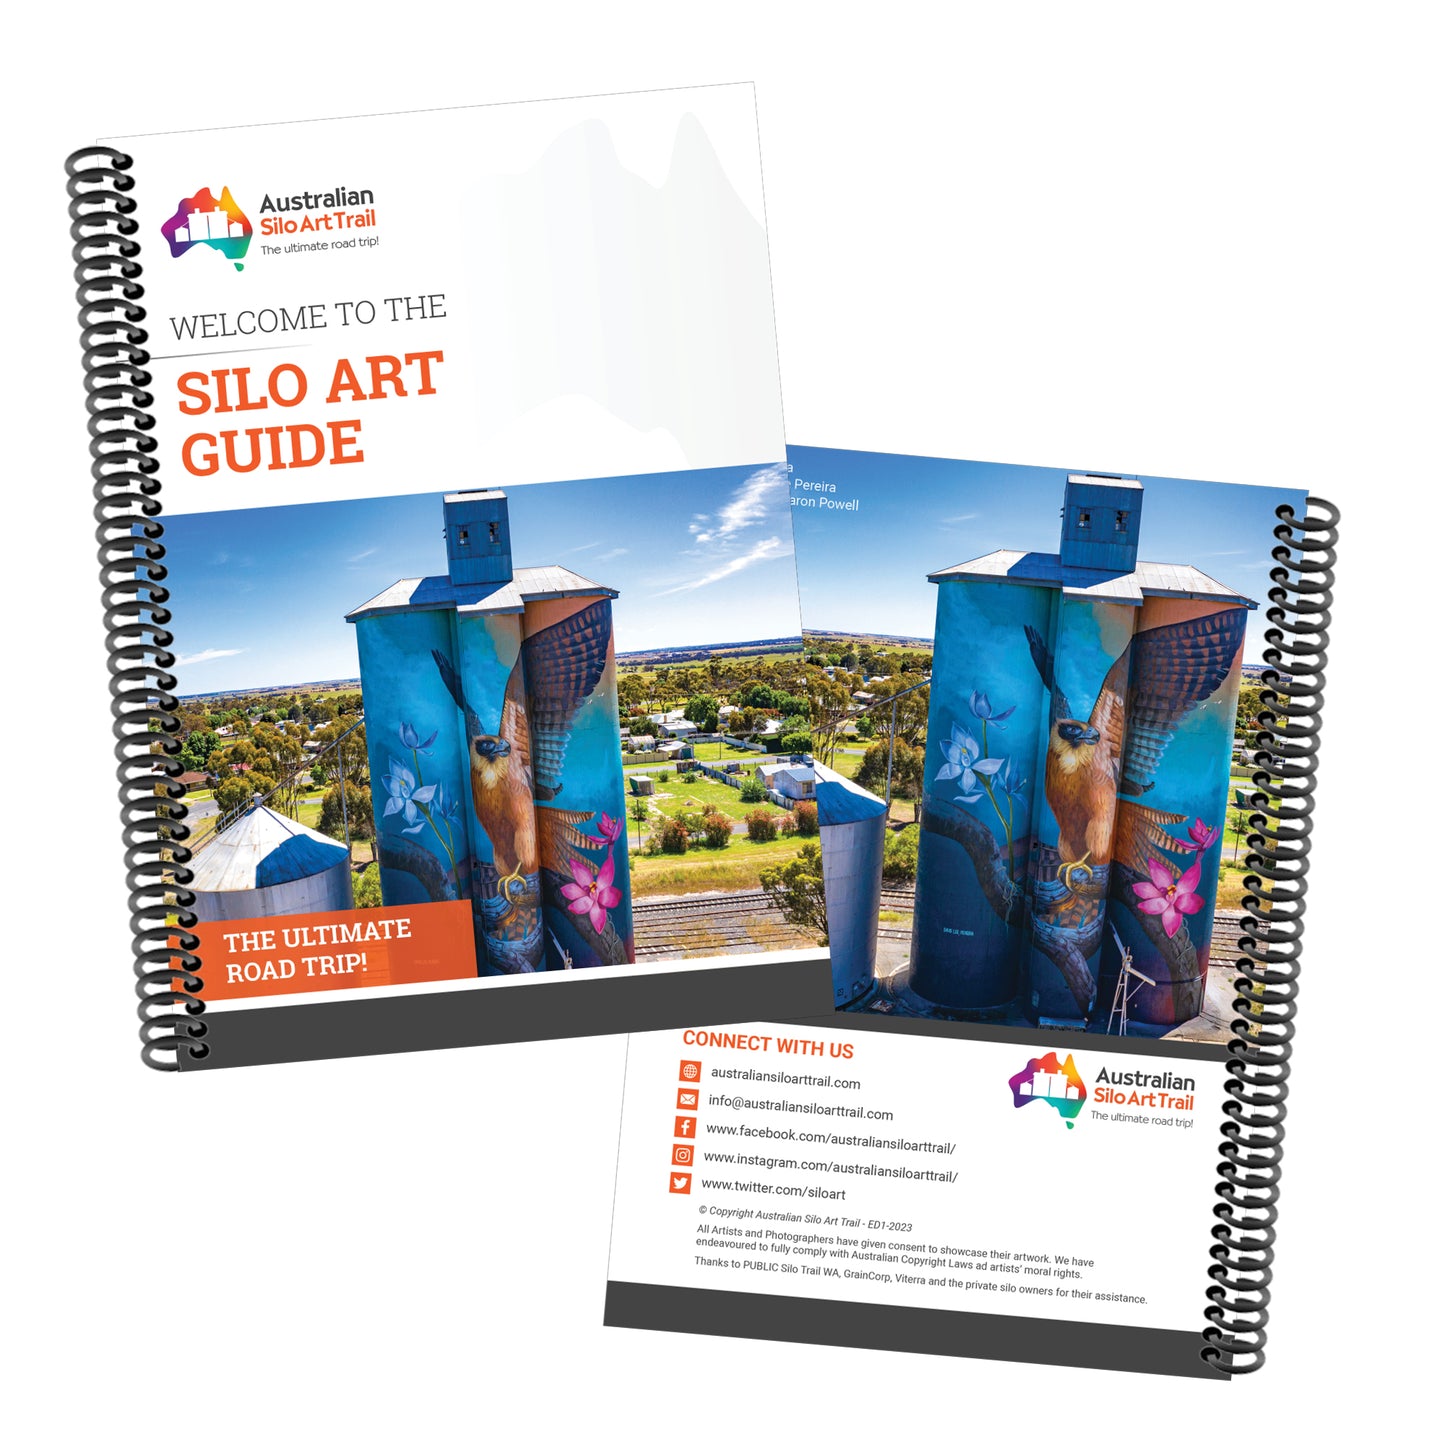 The Australian Silo Art Guide